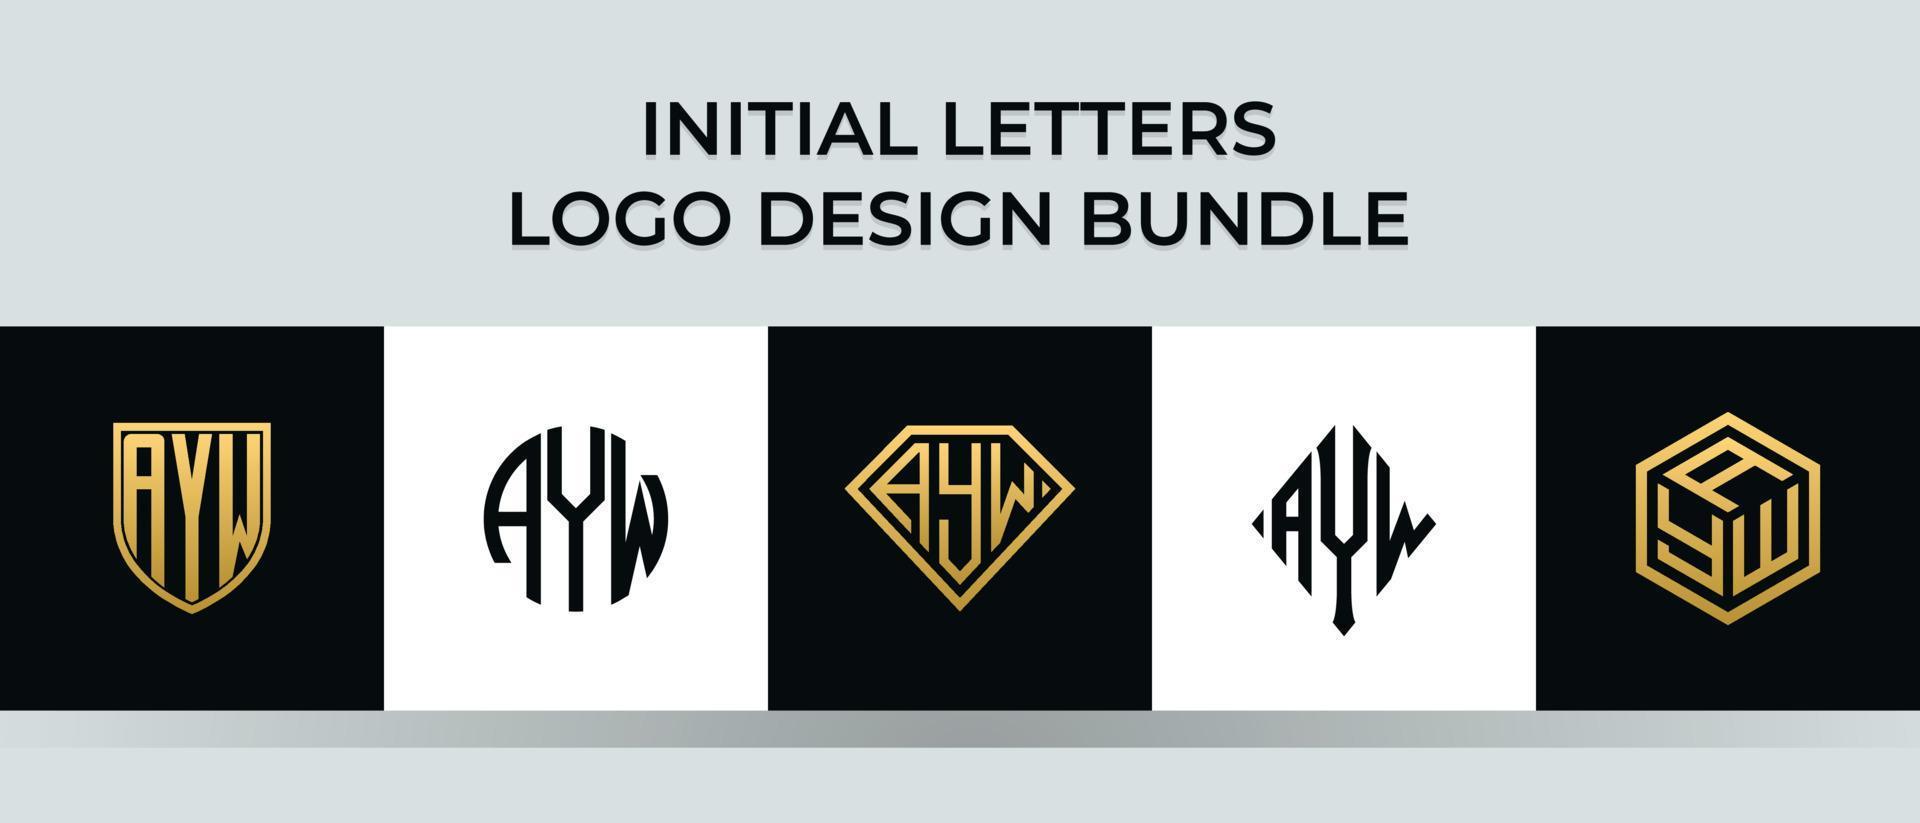 lettere iniziali ayw logo design bundle vettore